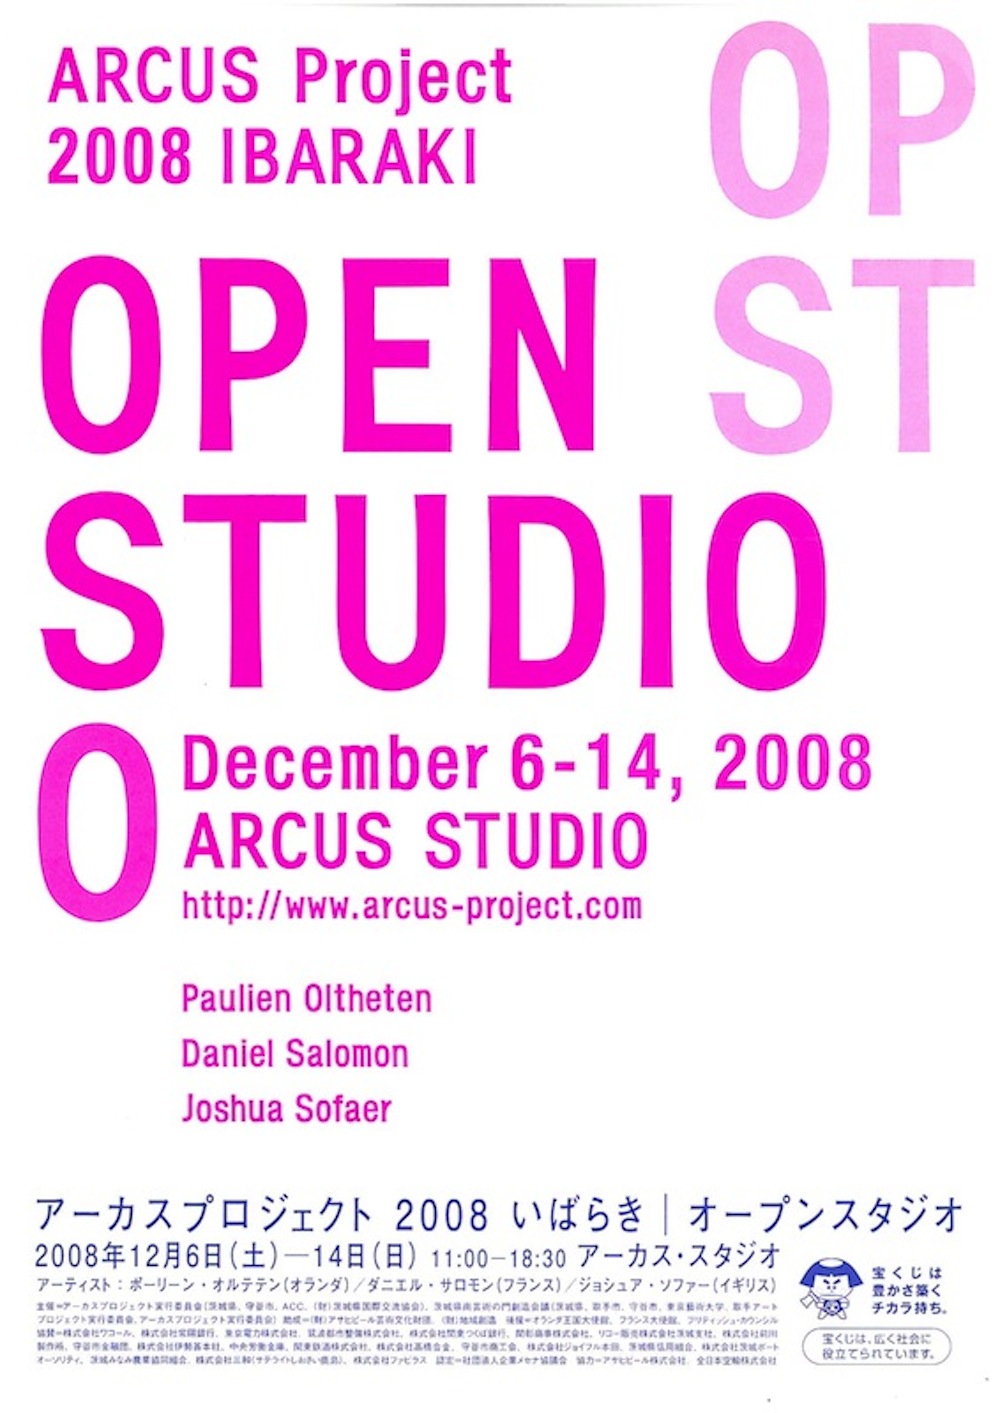 ARCUSチラシ 2008 アーカスプロジェクト オープンスタジオ